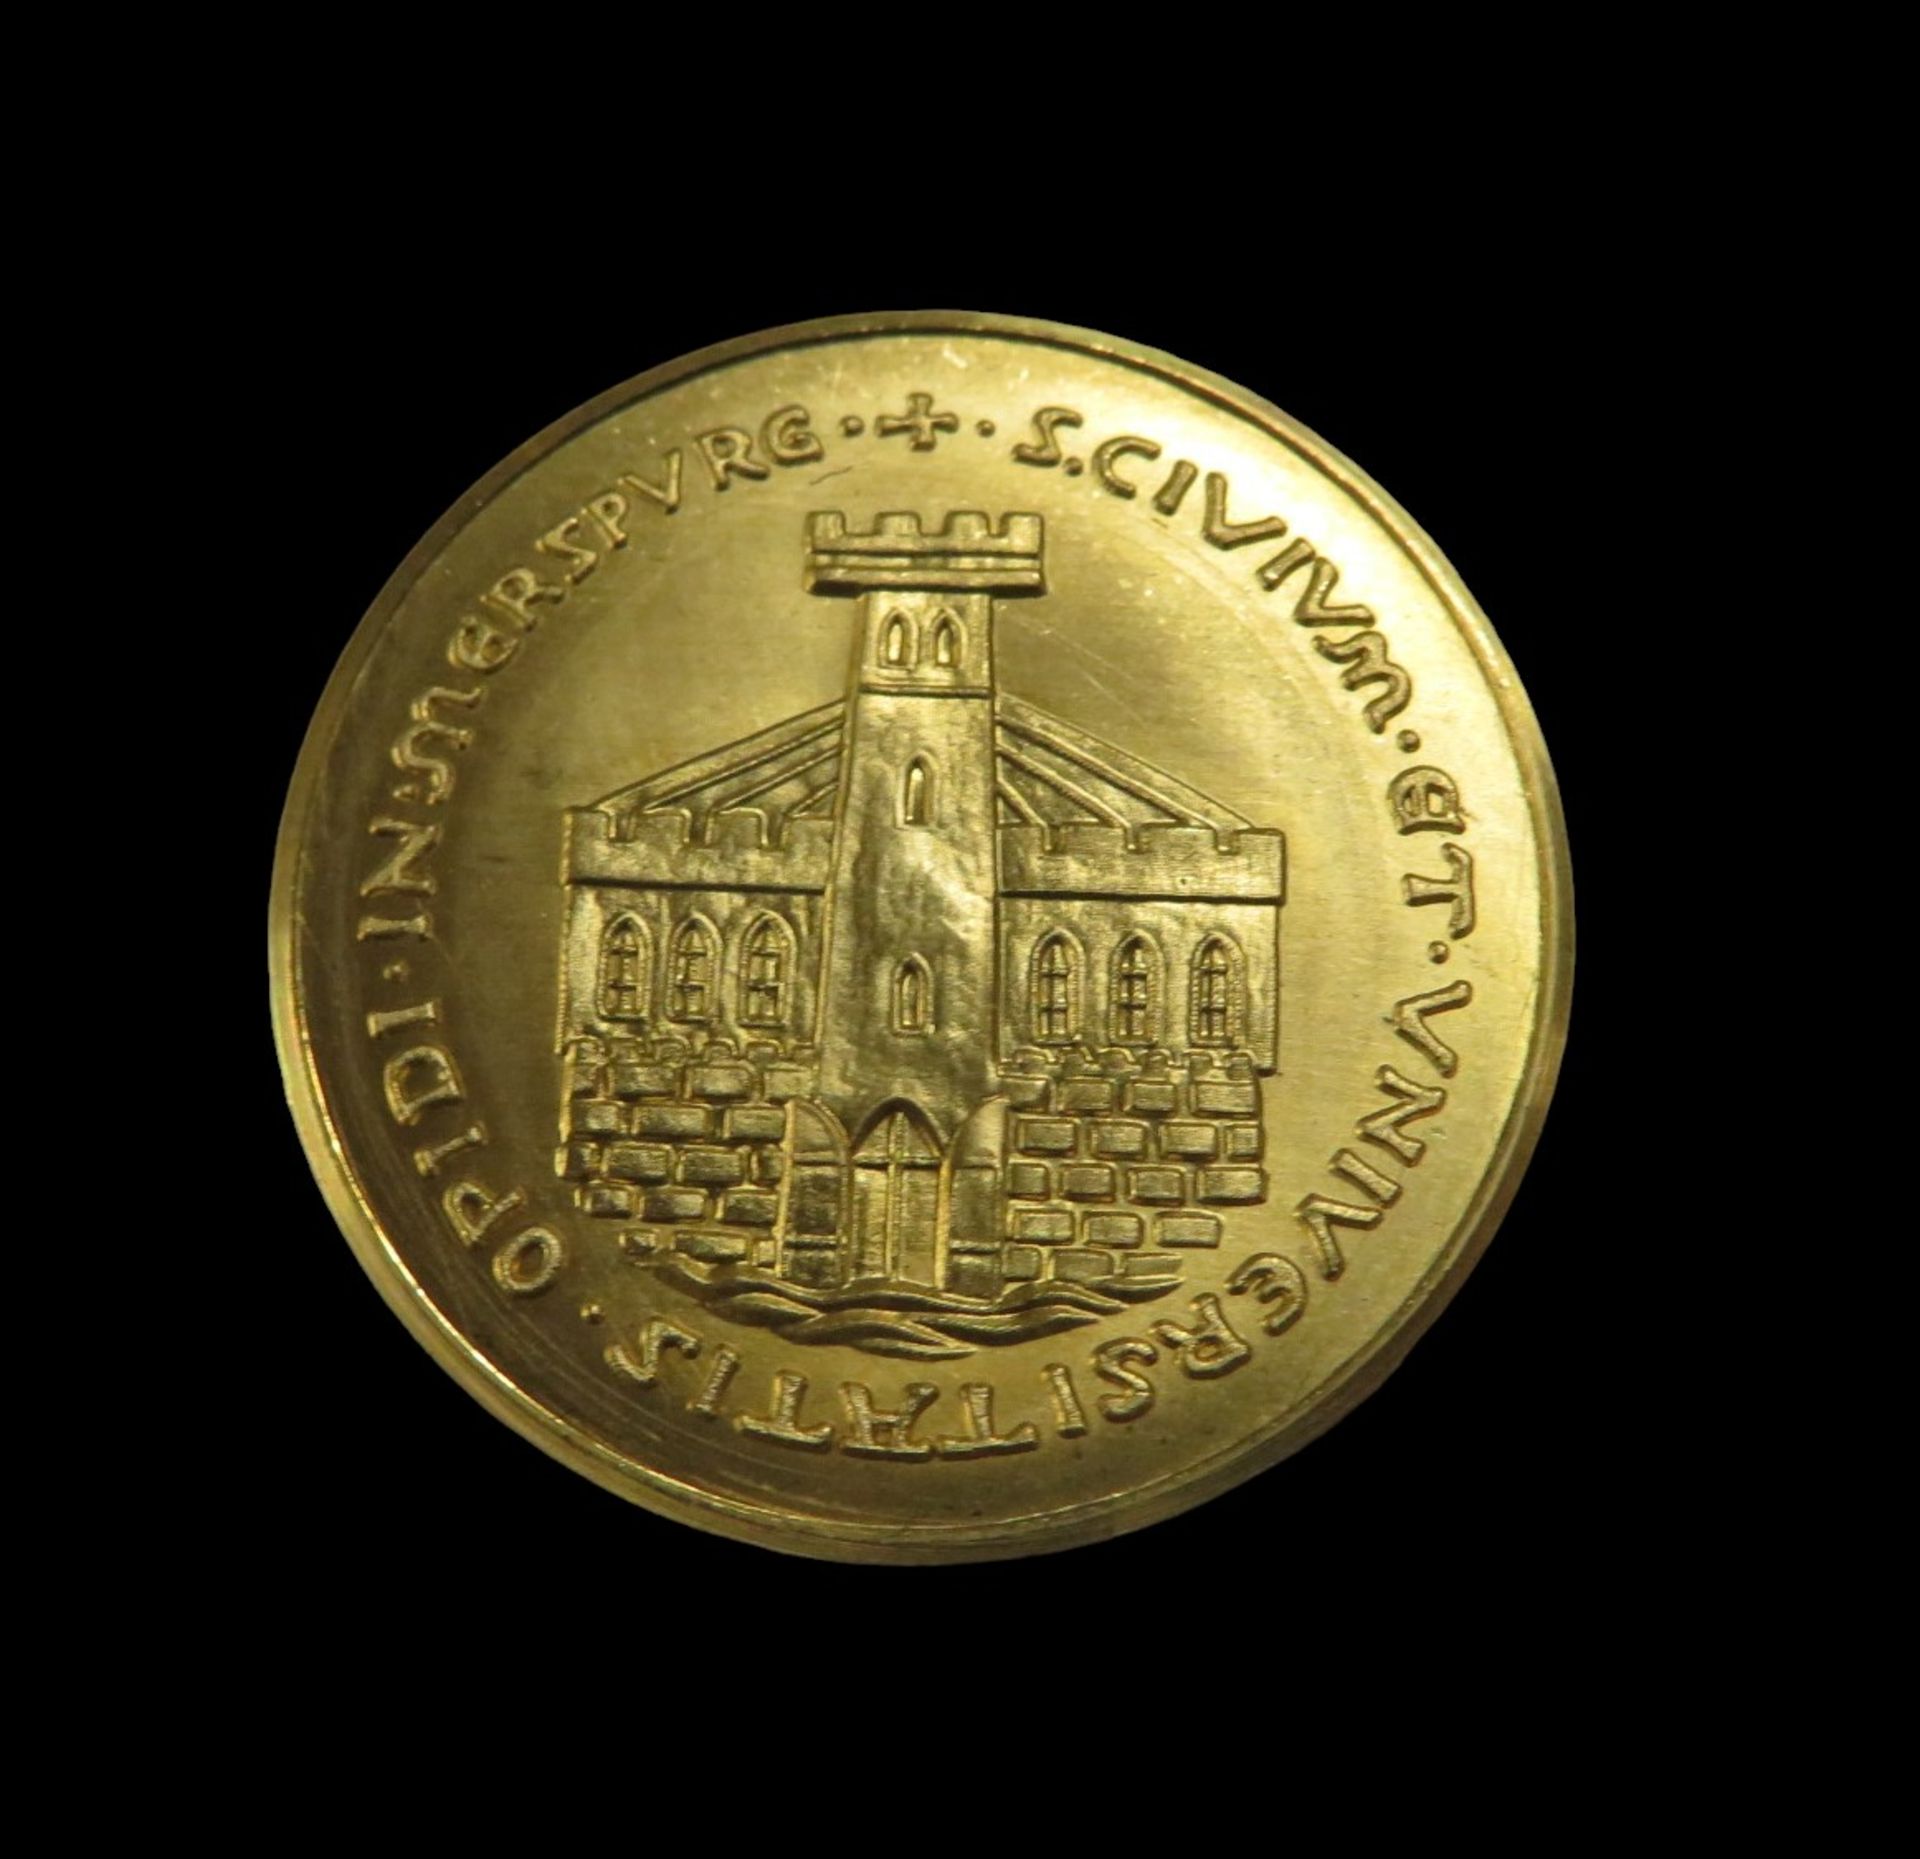 Goldmedaille, Annette von Droste-Hülshoff, Meersburg, Gold 986/000, 8,7 g, d 2,5 cm. - Image 2 of 2